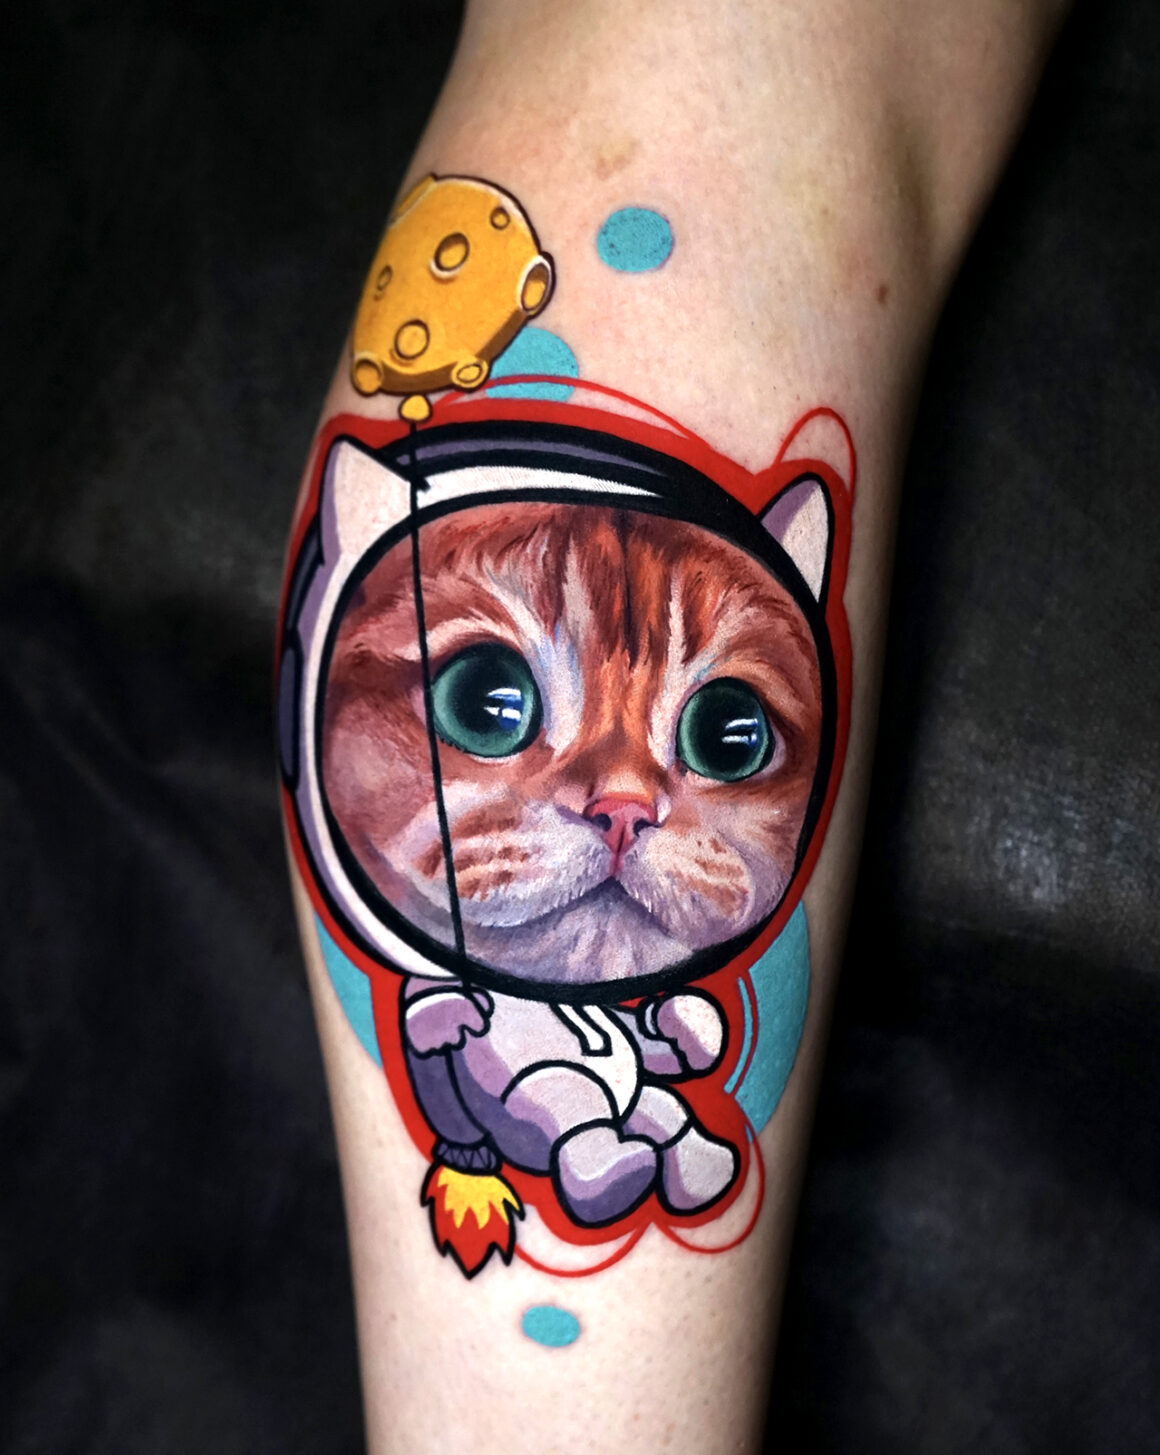 Tattoo by Daria Pirojenco